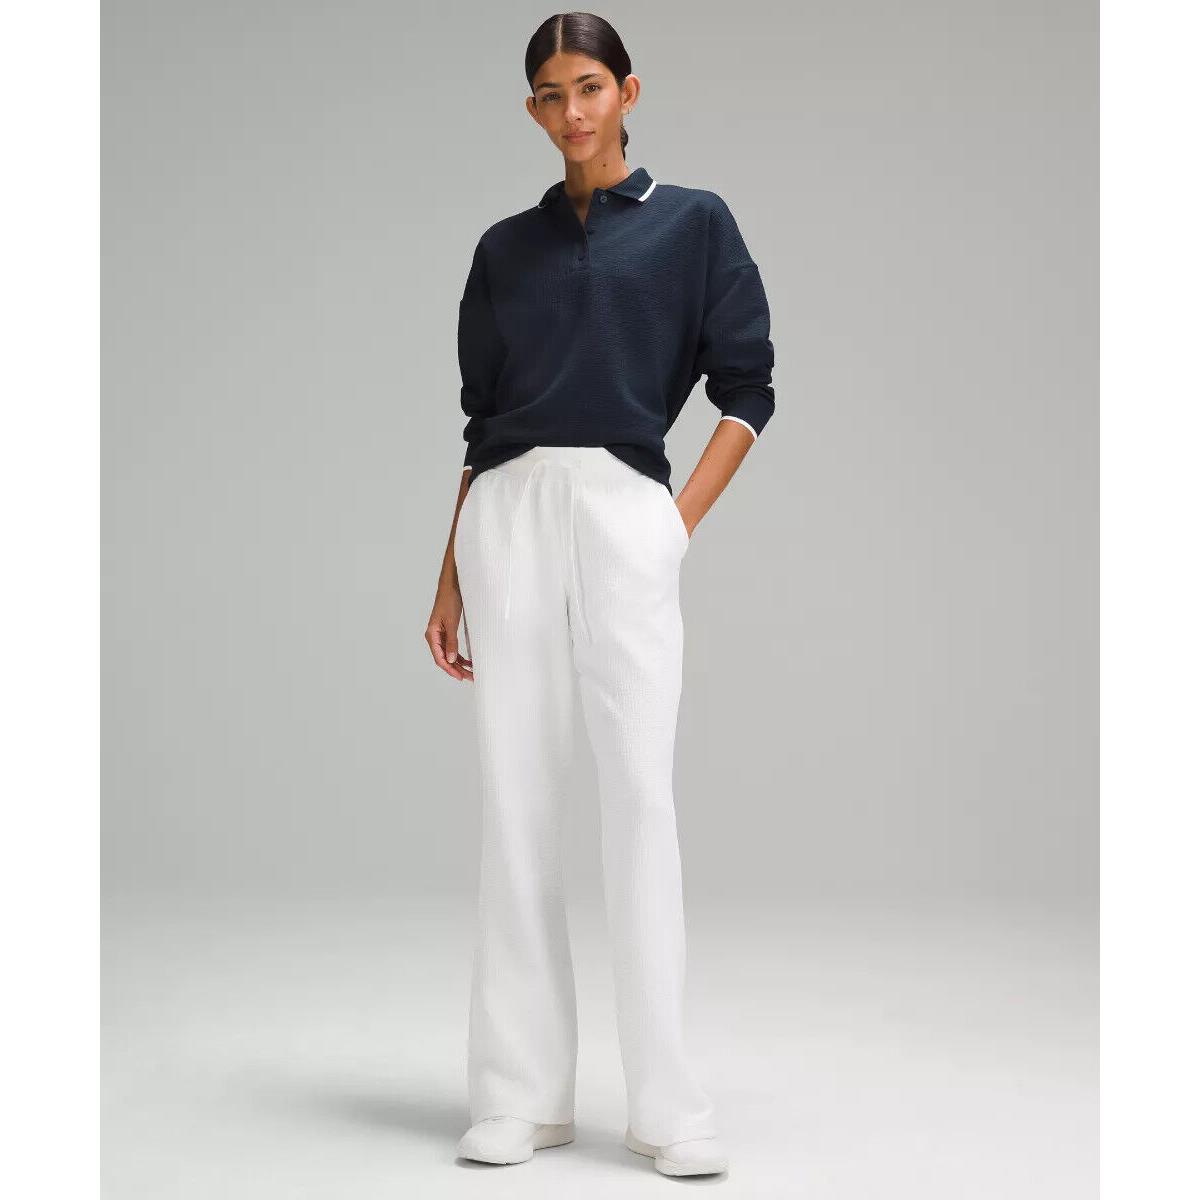 Lululemon Textured Long Sleeve Polo Shirt - Retail